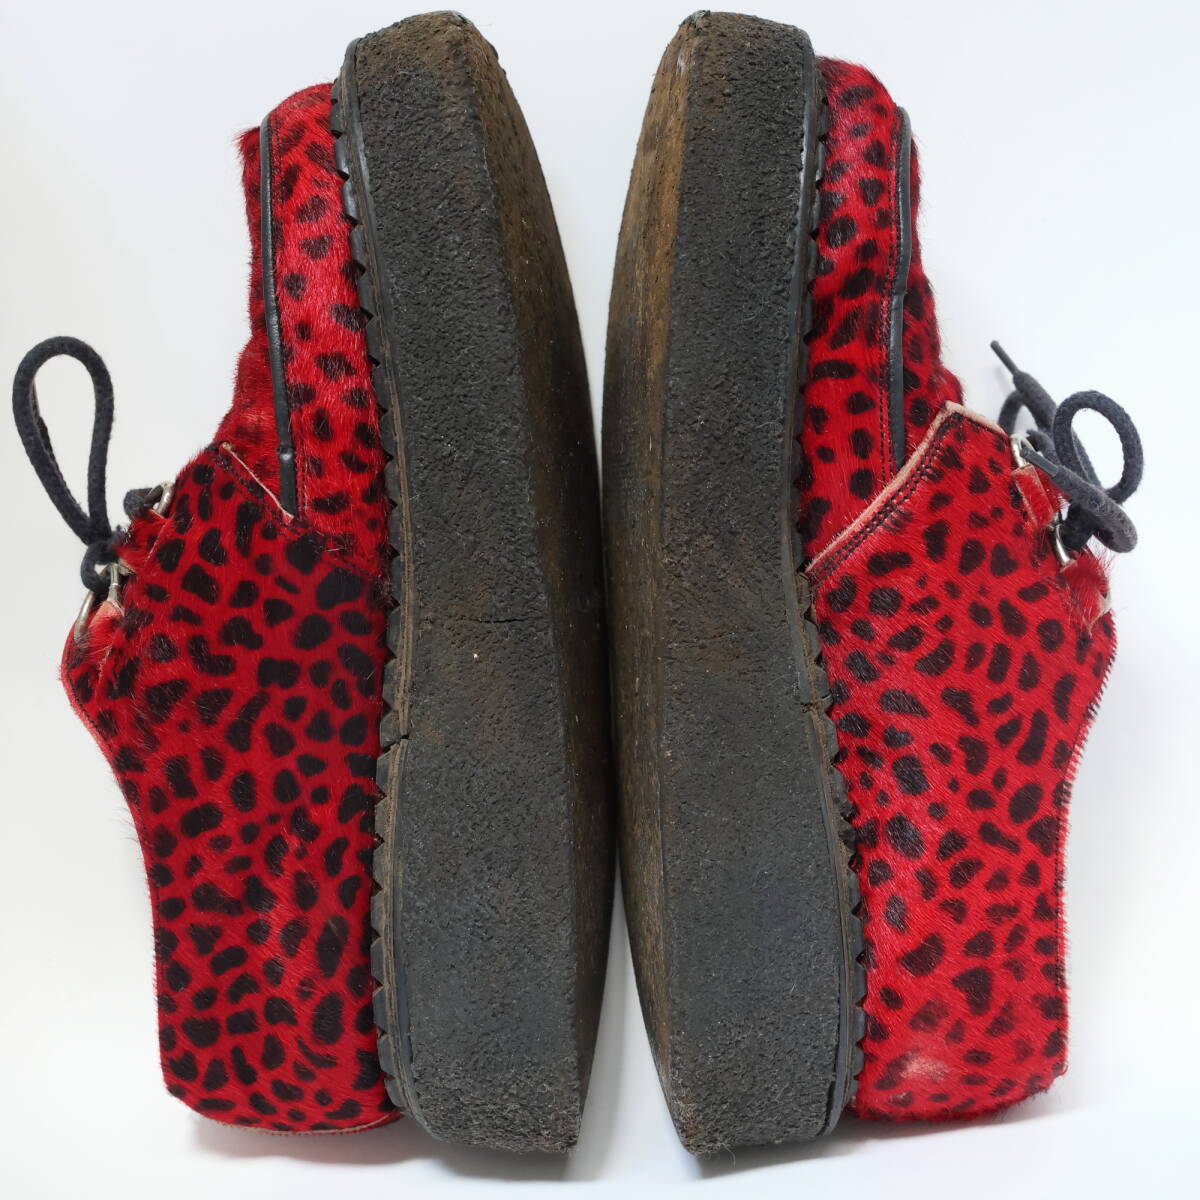 GEORGE COX George Cox толщина низ Raver подошва размер 4(23.5cm примерно ) Leopard леопардовая расцветка красный Shoe No. 8961 MADE IN ENGKAND